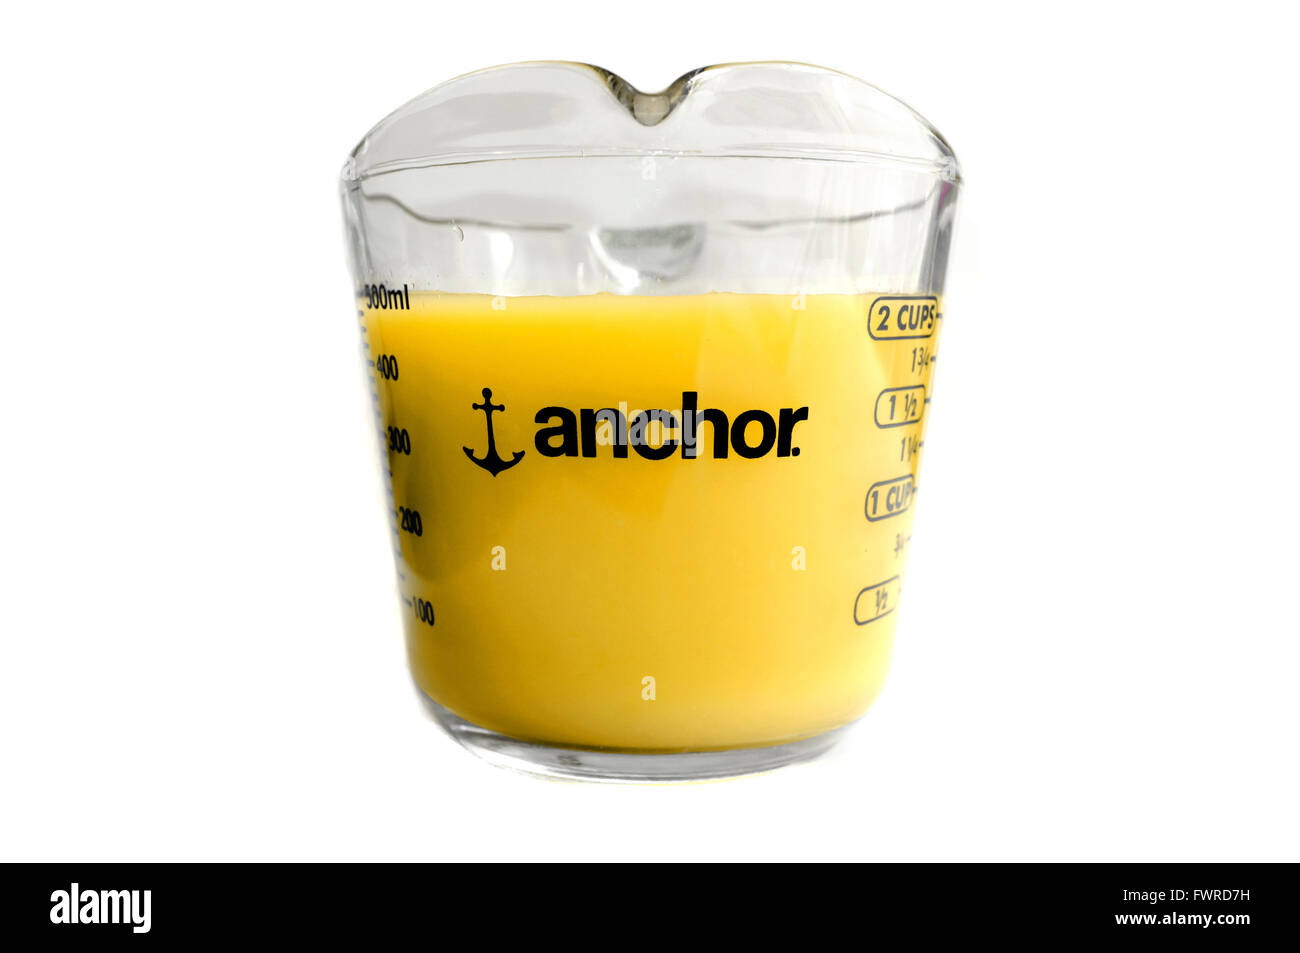 https://c8.alamy.com/comp/FWRD7H/yellow-coloured-liquid-in-an-anchor-measuring-jug-photographed-against-FWRD7H.jpg